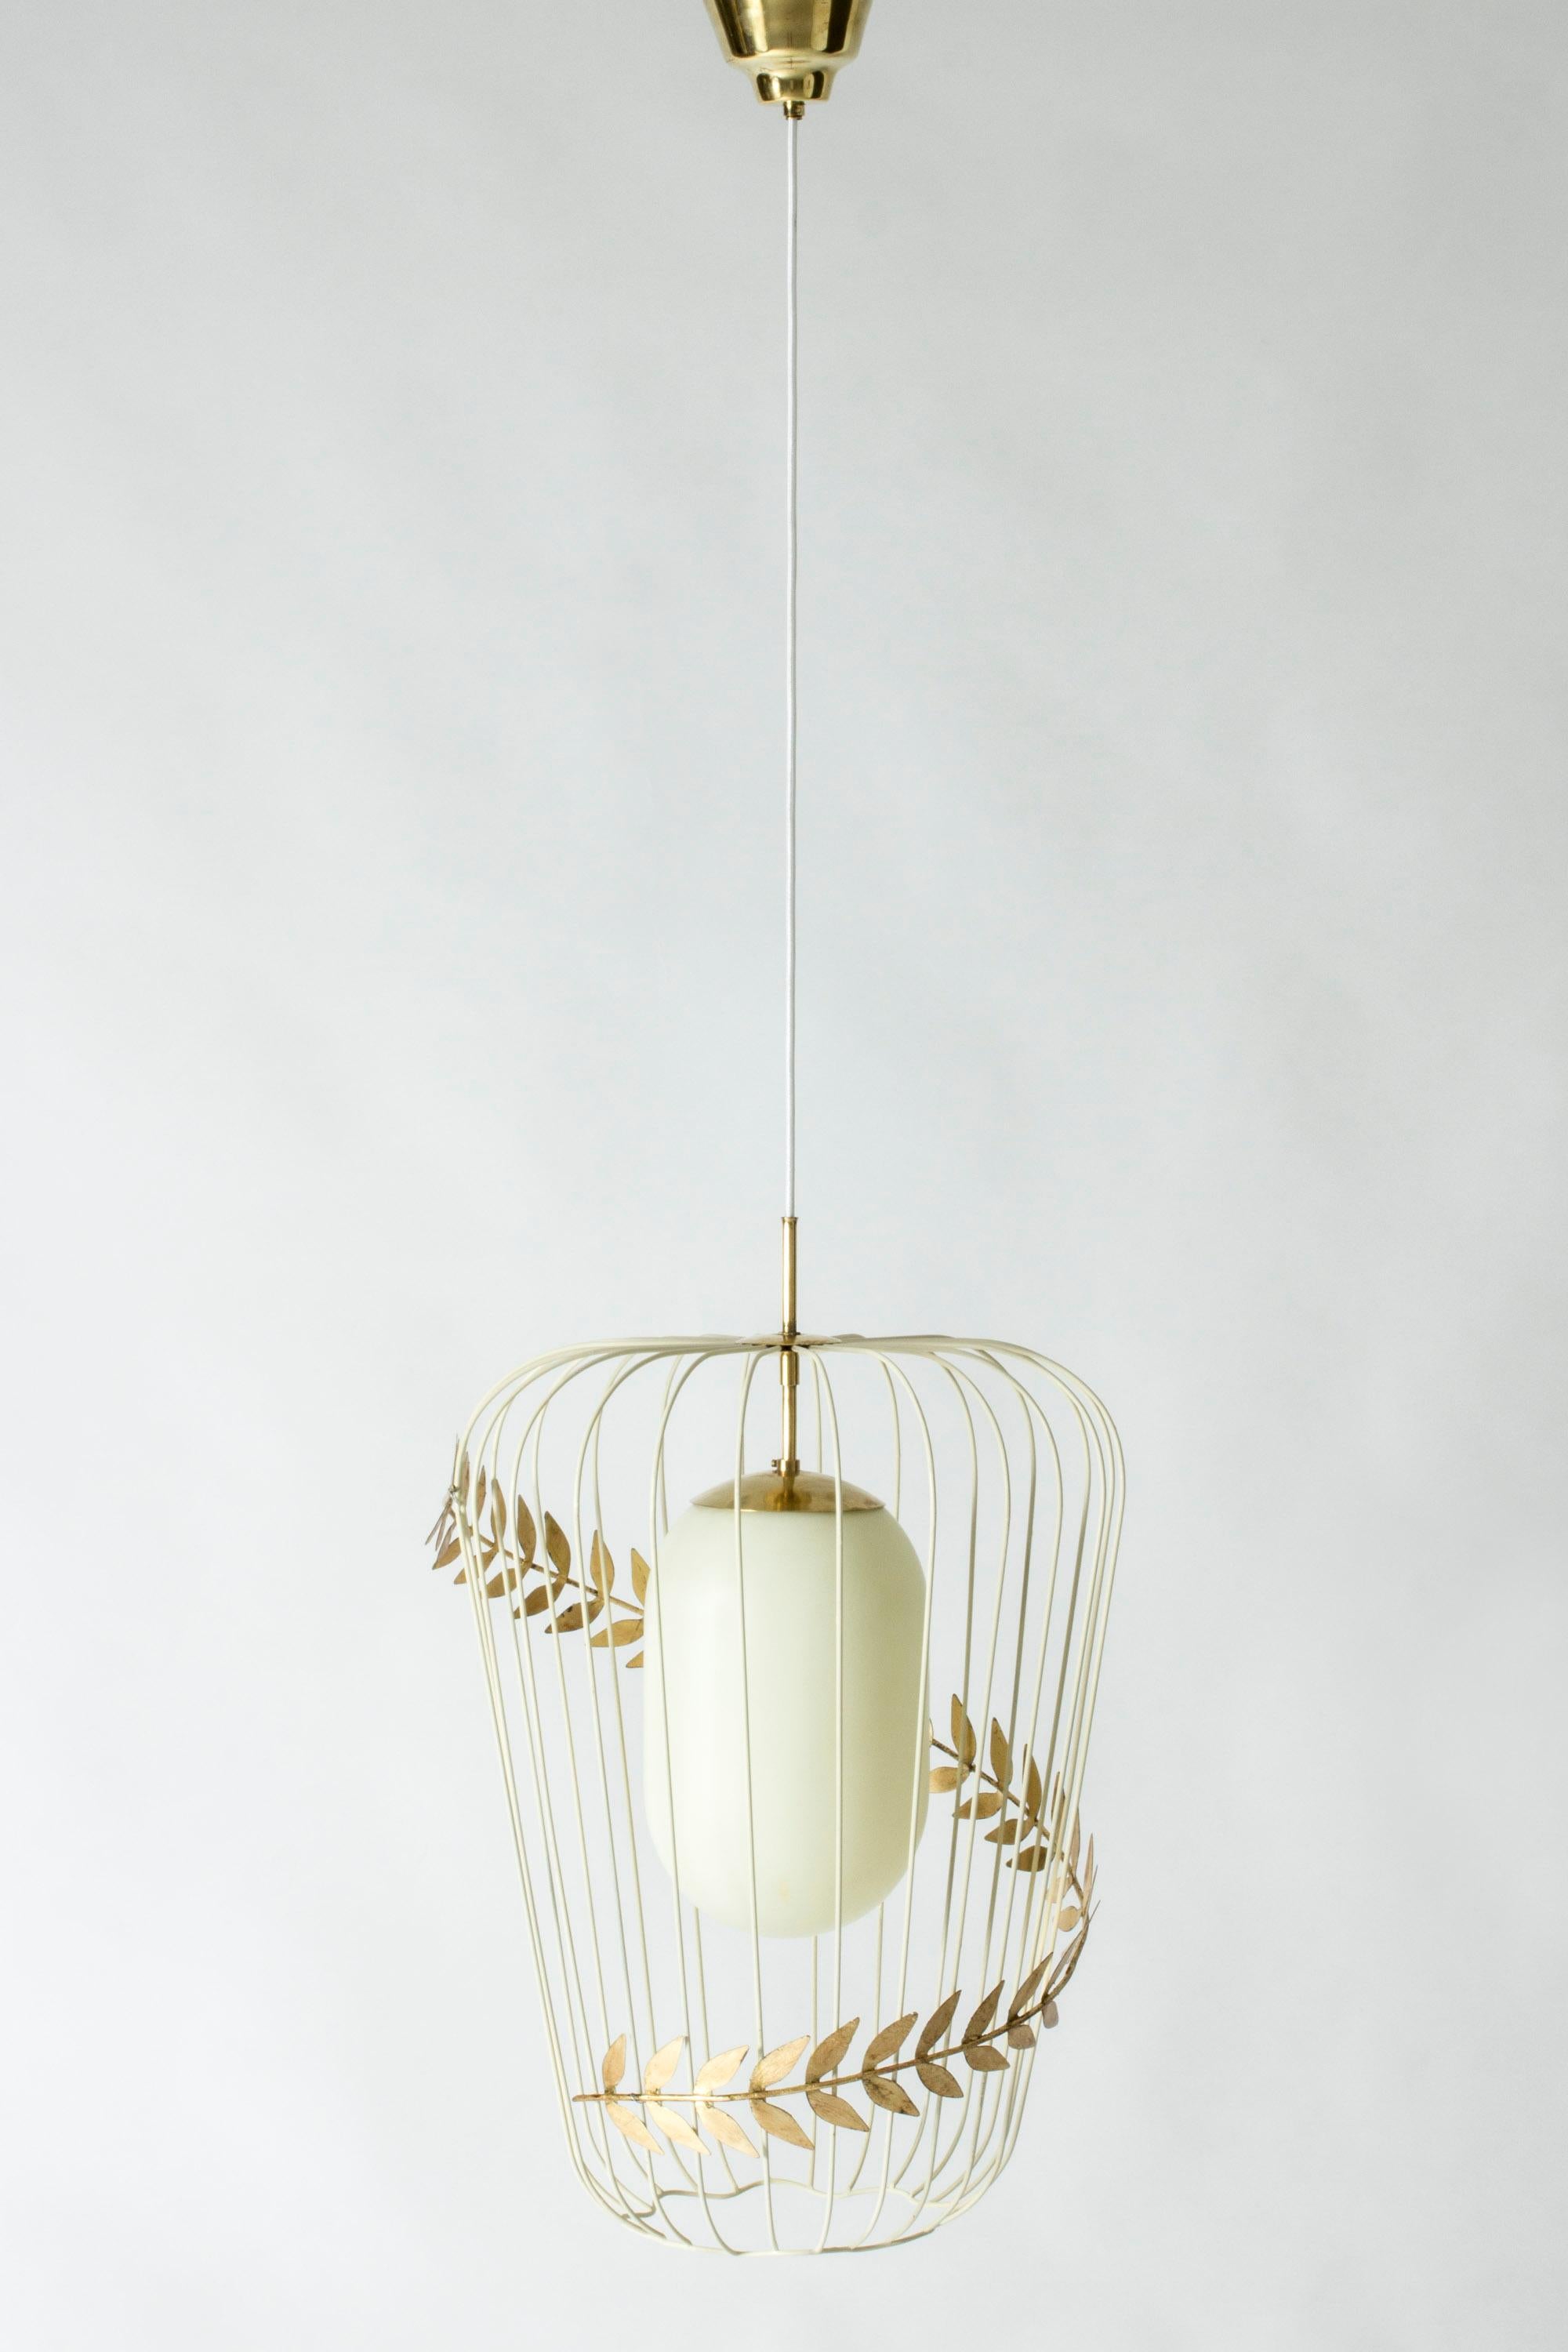 Scandinavian Modern Pendant Ceiling Light by Hans Bergström for Ateljé Lyktan, Sweden, 1940s